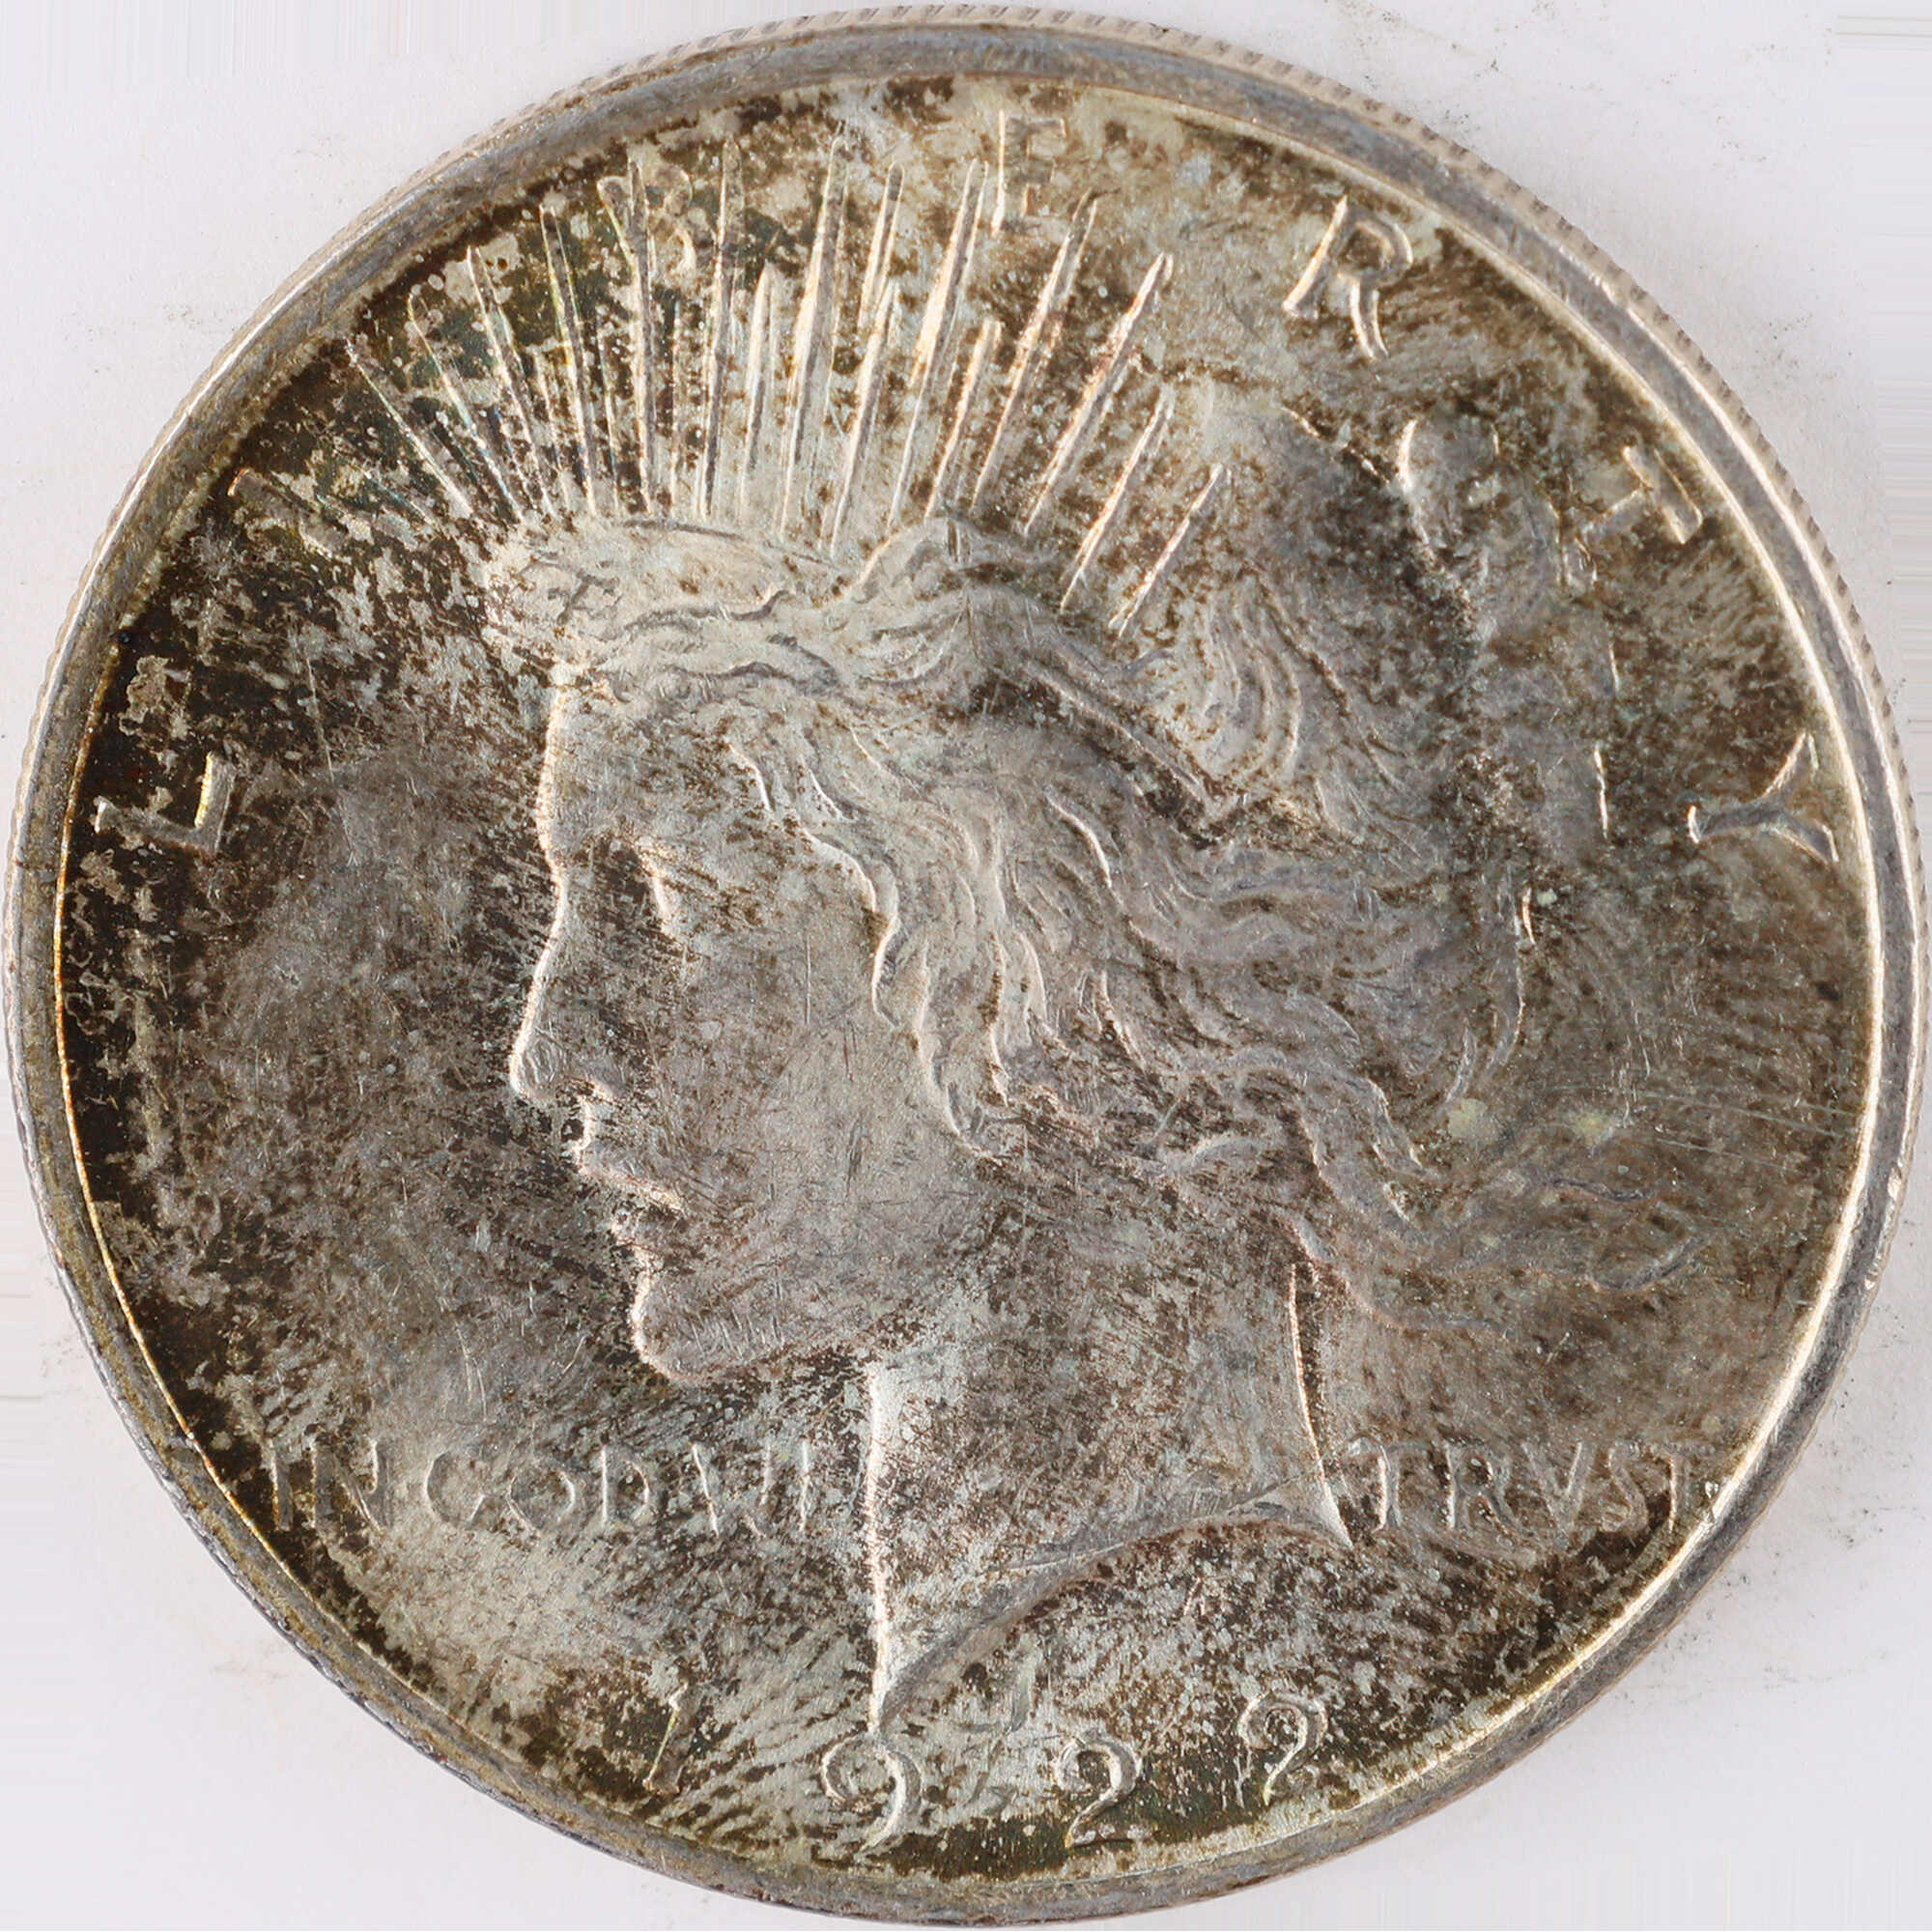 1922 D Peace Dollar Uncirculated Silver $1 Coin SKU:I12105